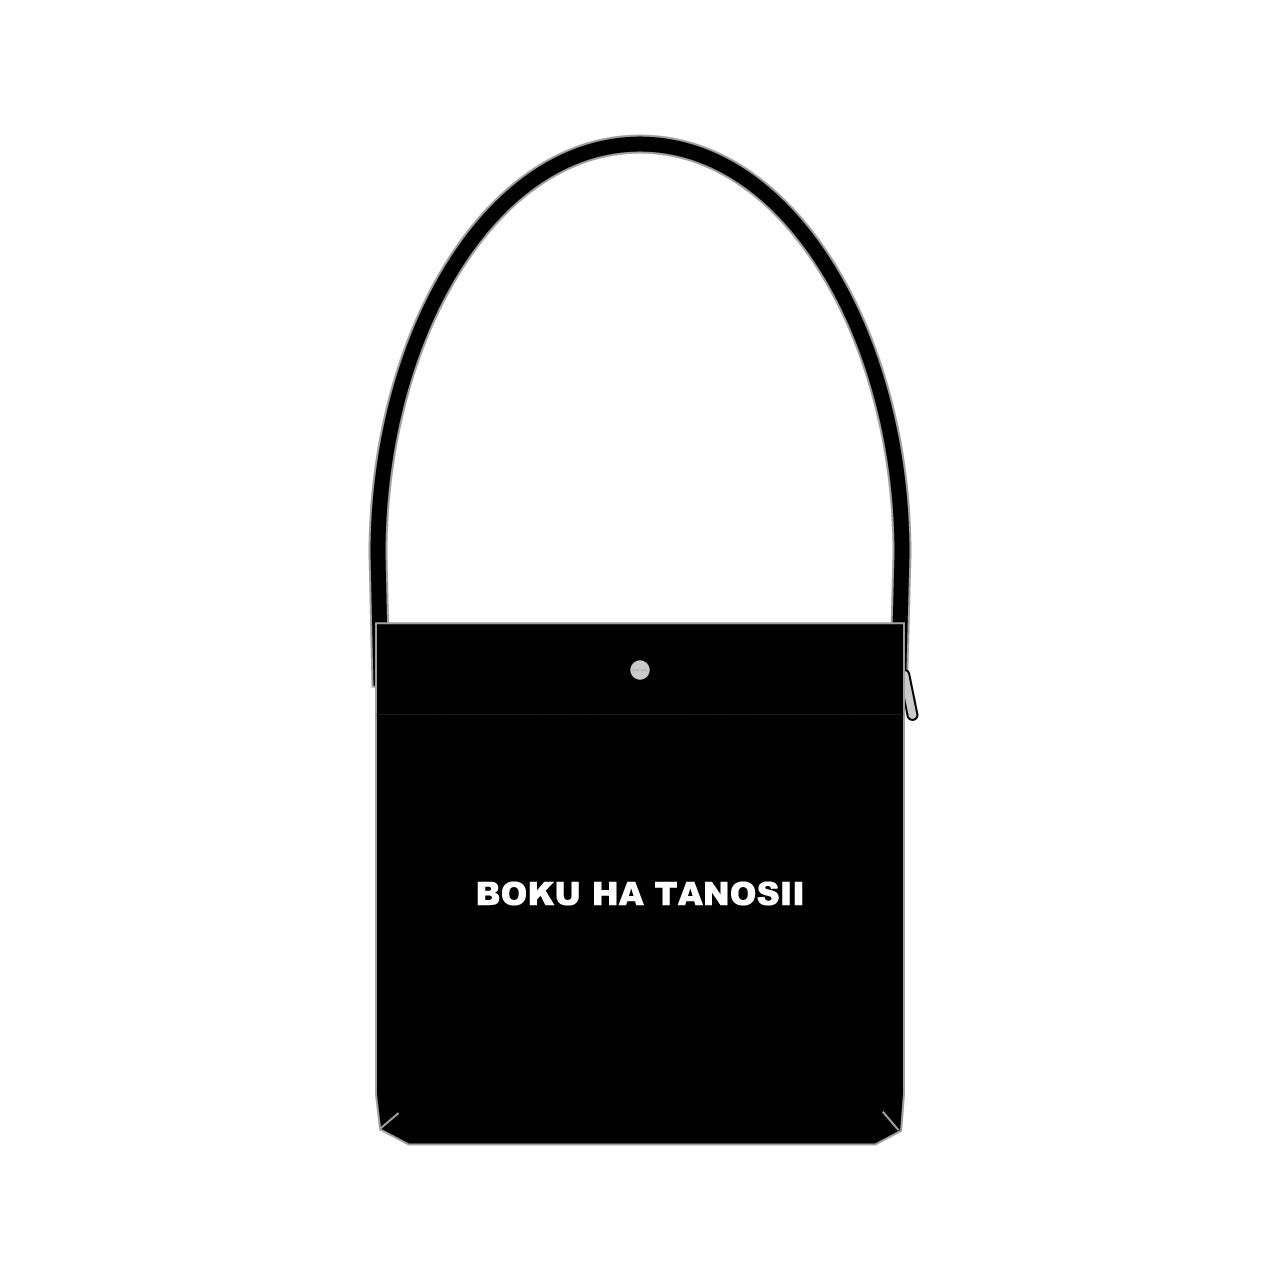 BOKU HA TANOSII ／ ボクタノショルダーバッグ "Black"